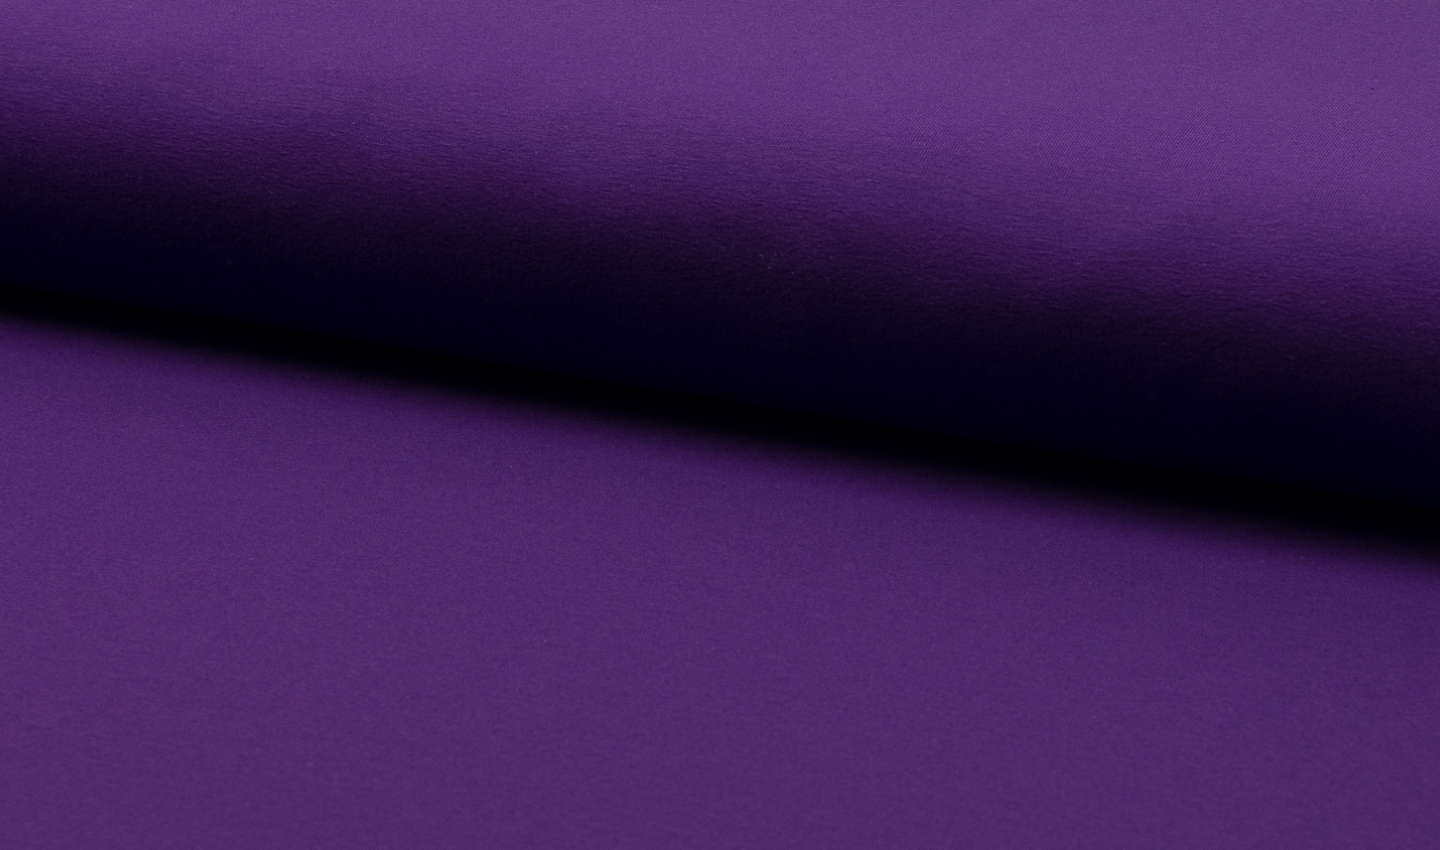 05m Jersey uni purple dunkellila violett 047